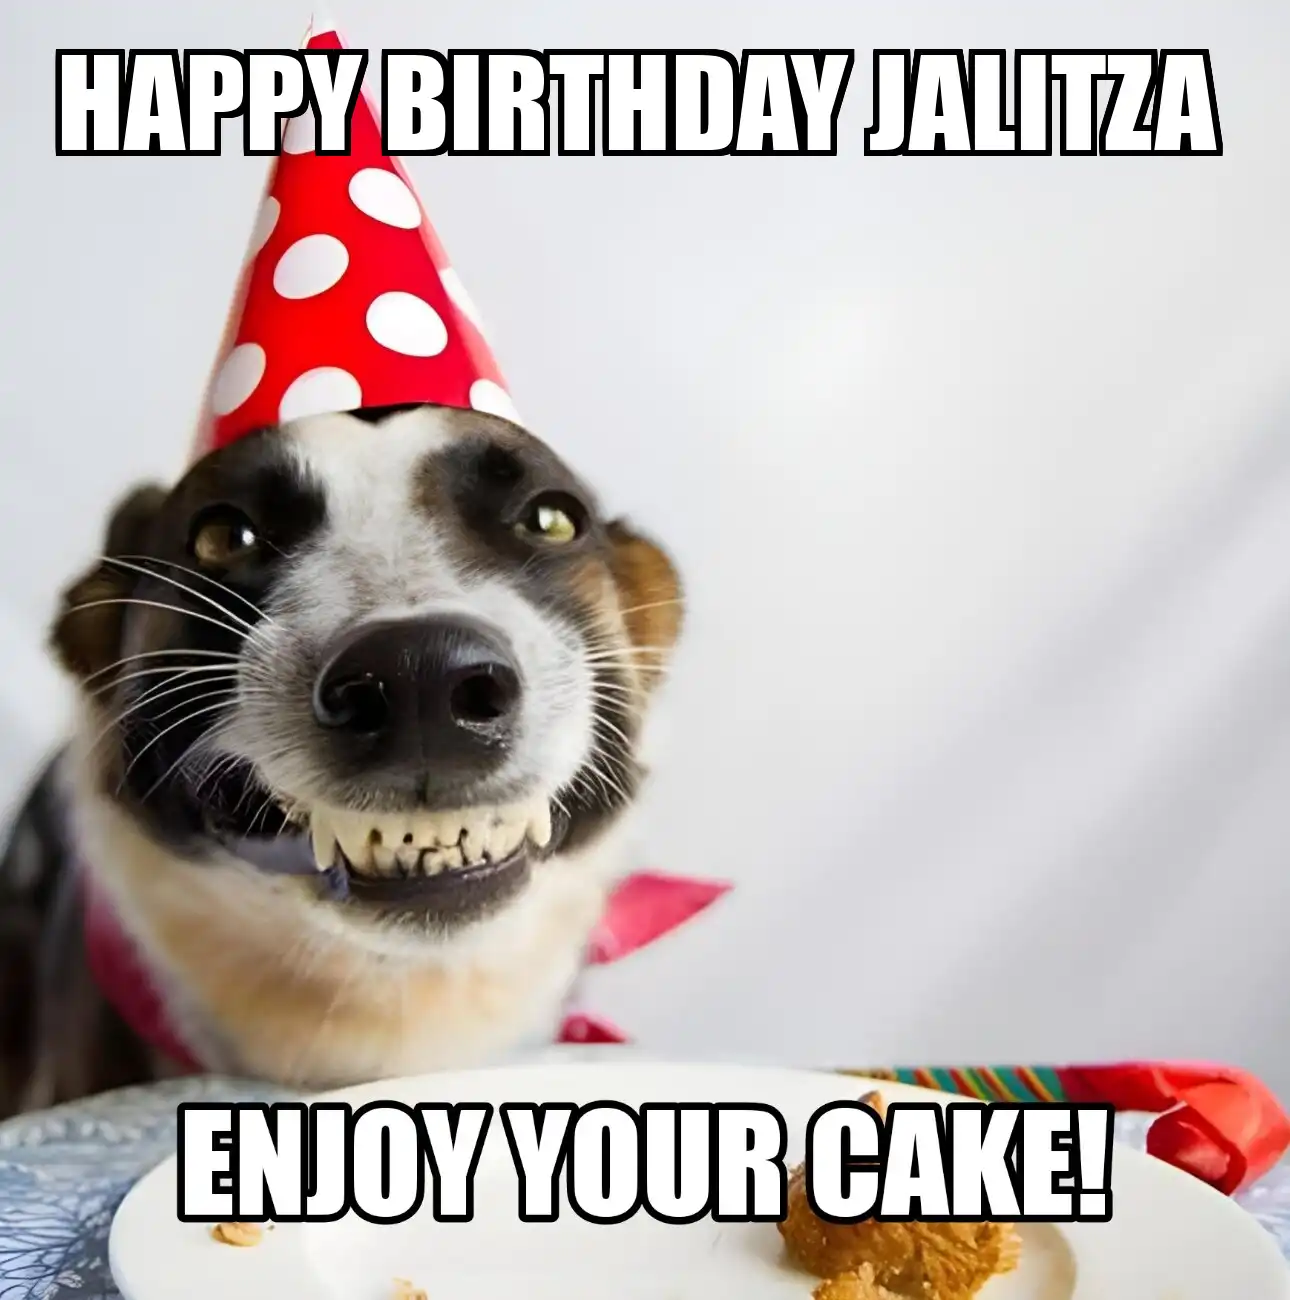 Happy Birthday Jalitza Enjoy Your Cake Dog Meme